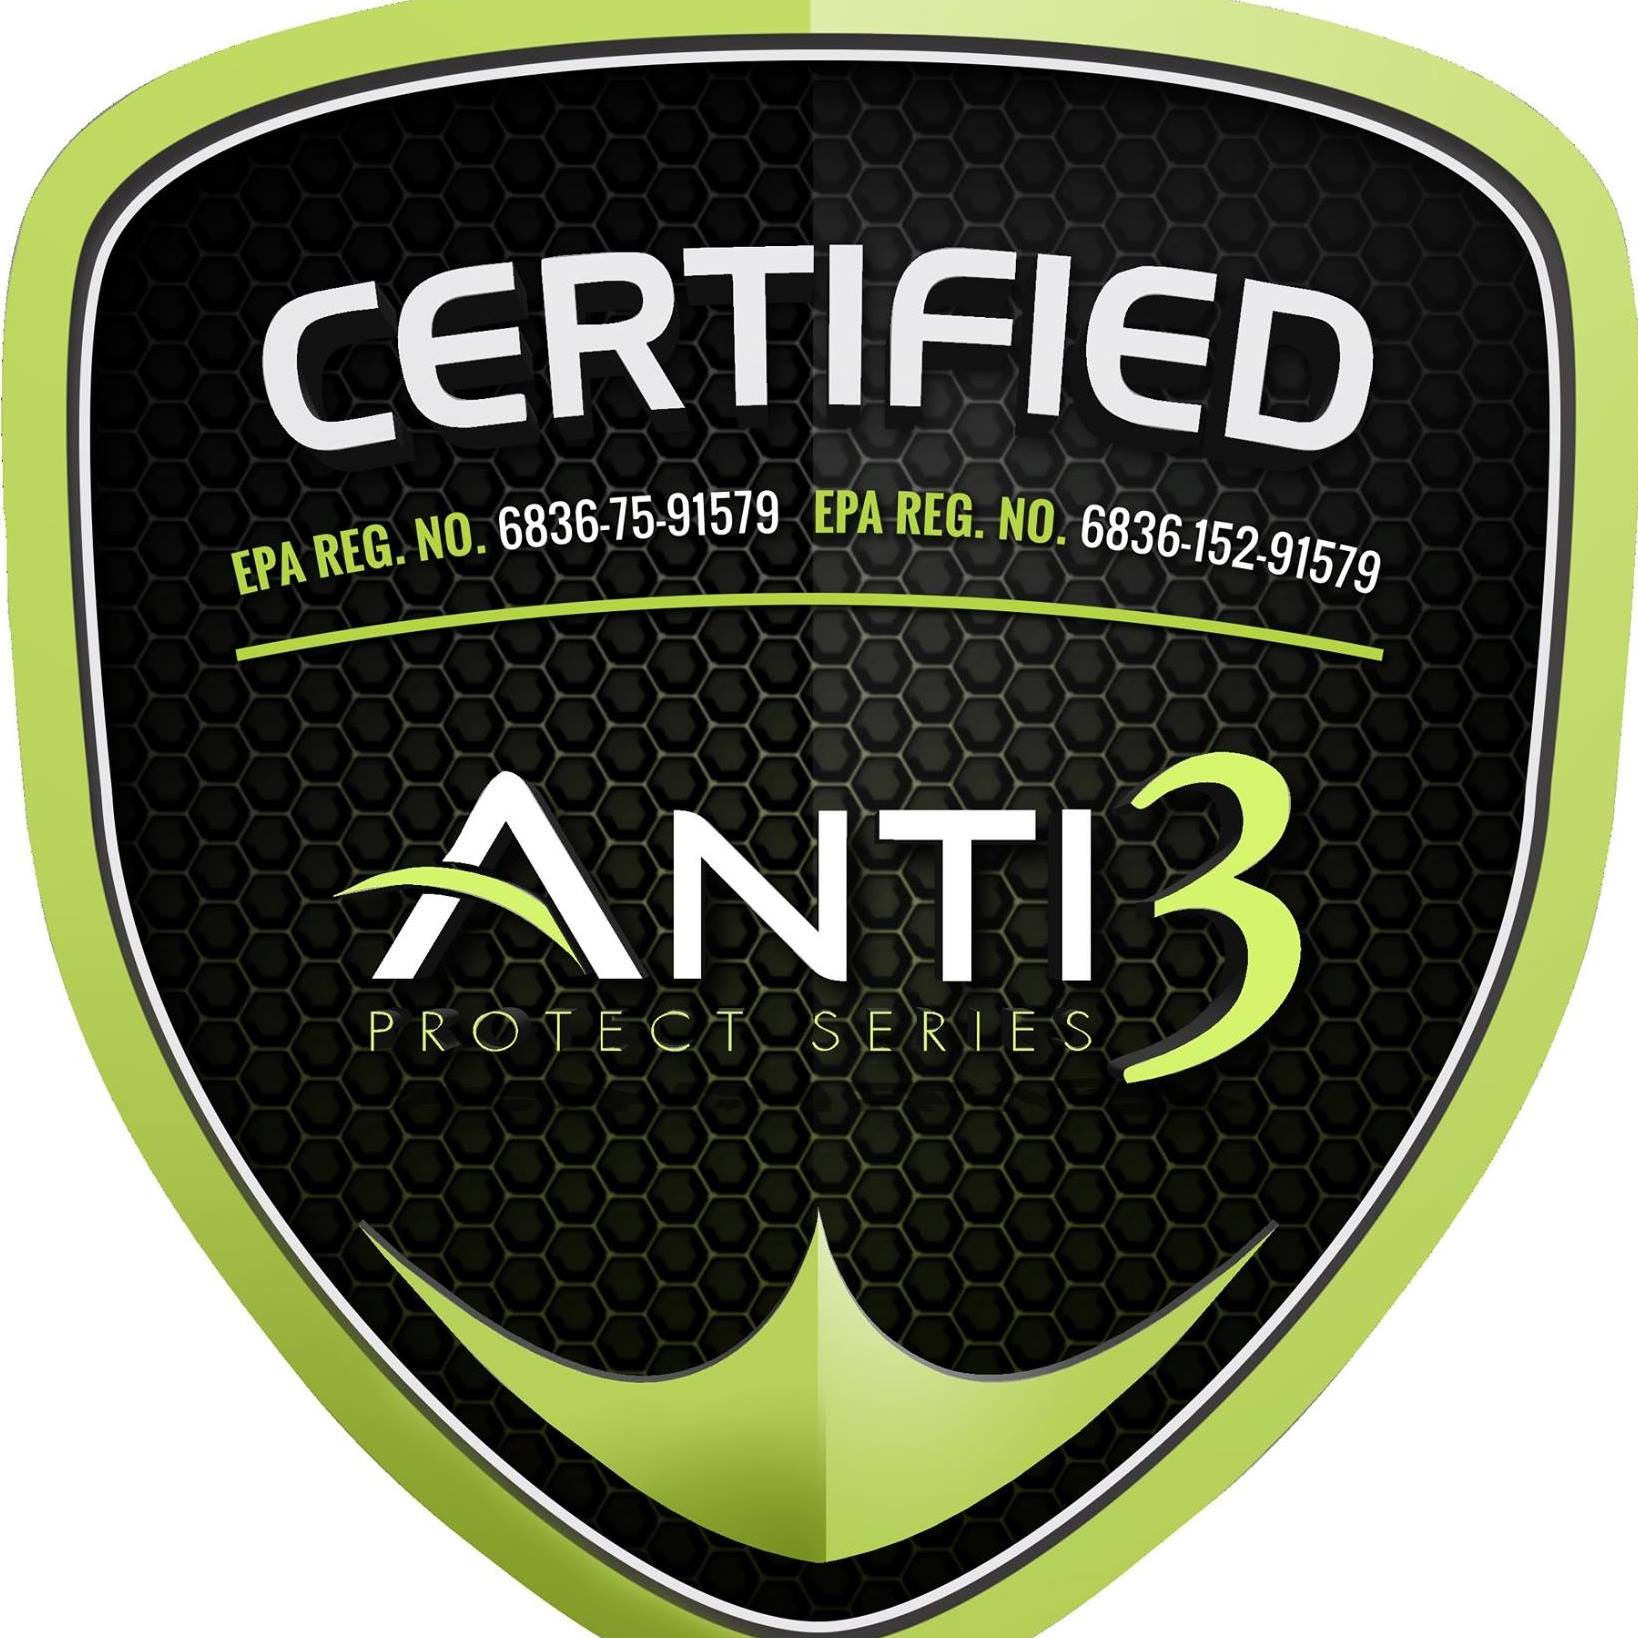 Anti3 Protect Series